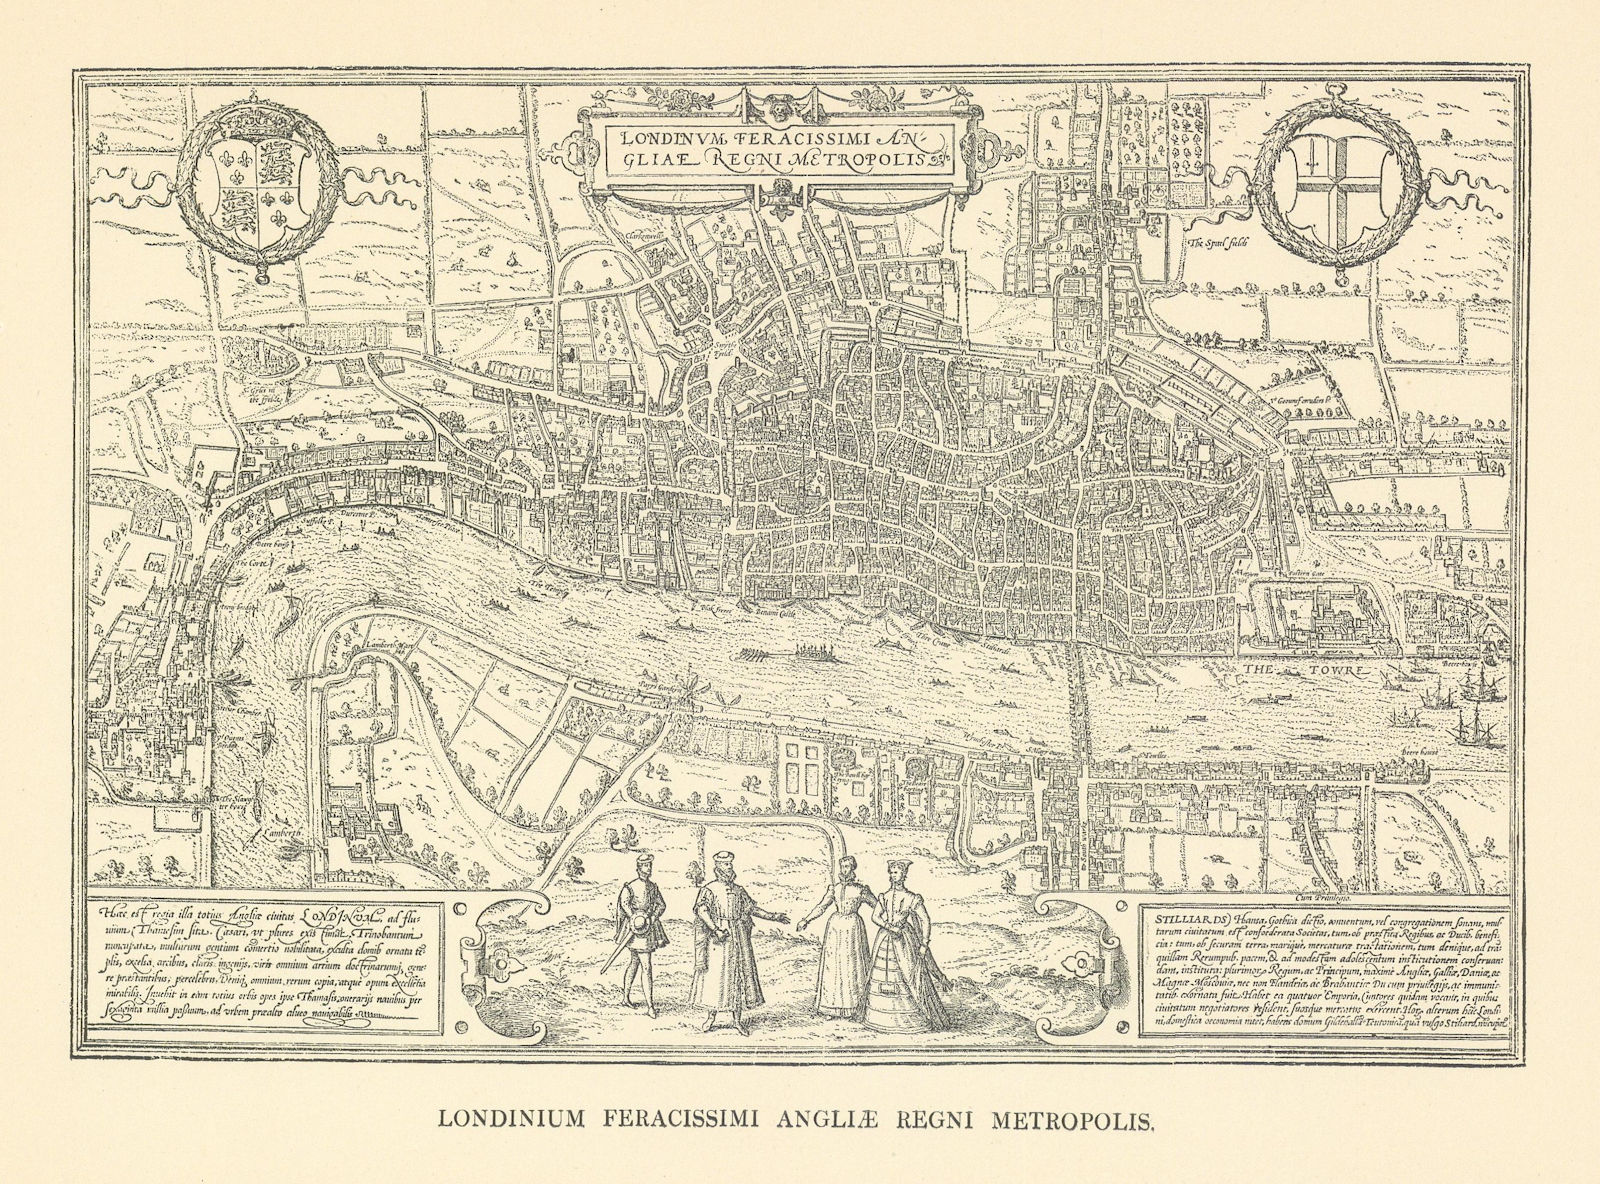 Associate Product Londinium Feracissimi Angliae Regni Metropolis c.1572 after Hoefnagel 1908 map